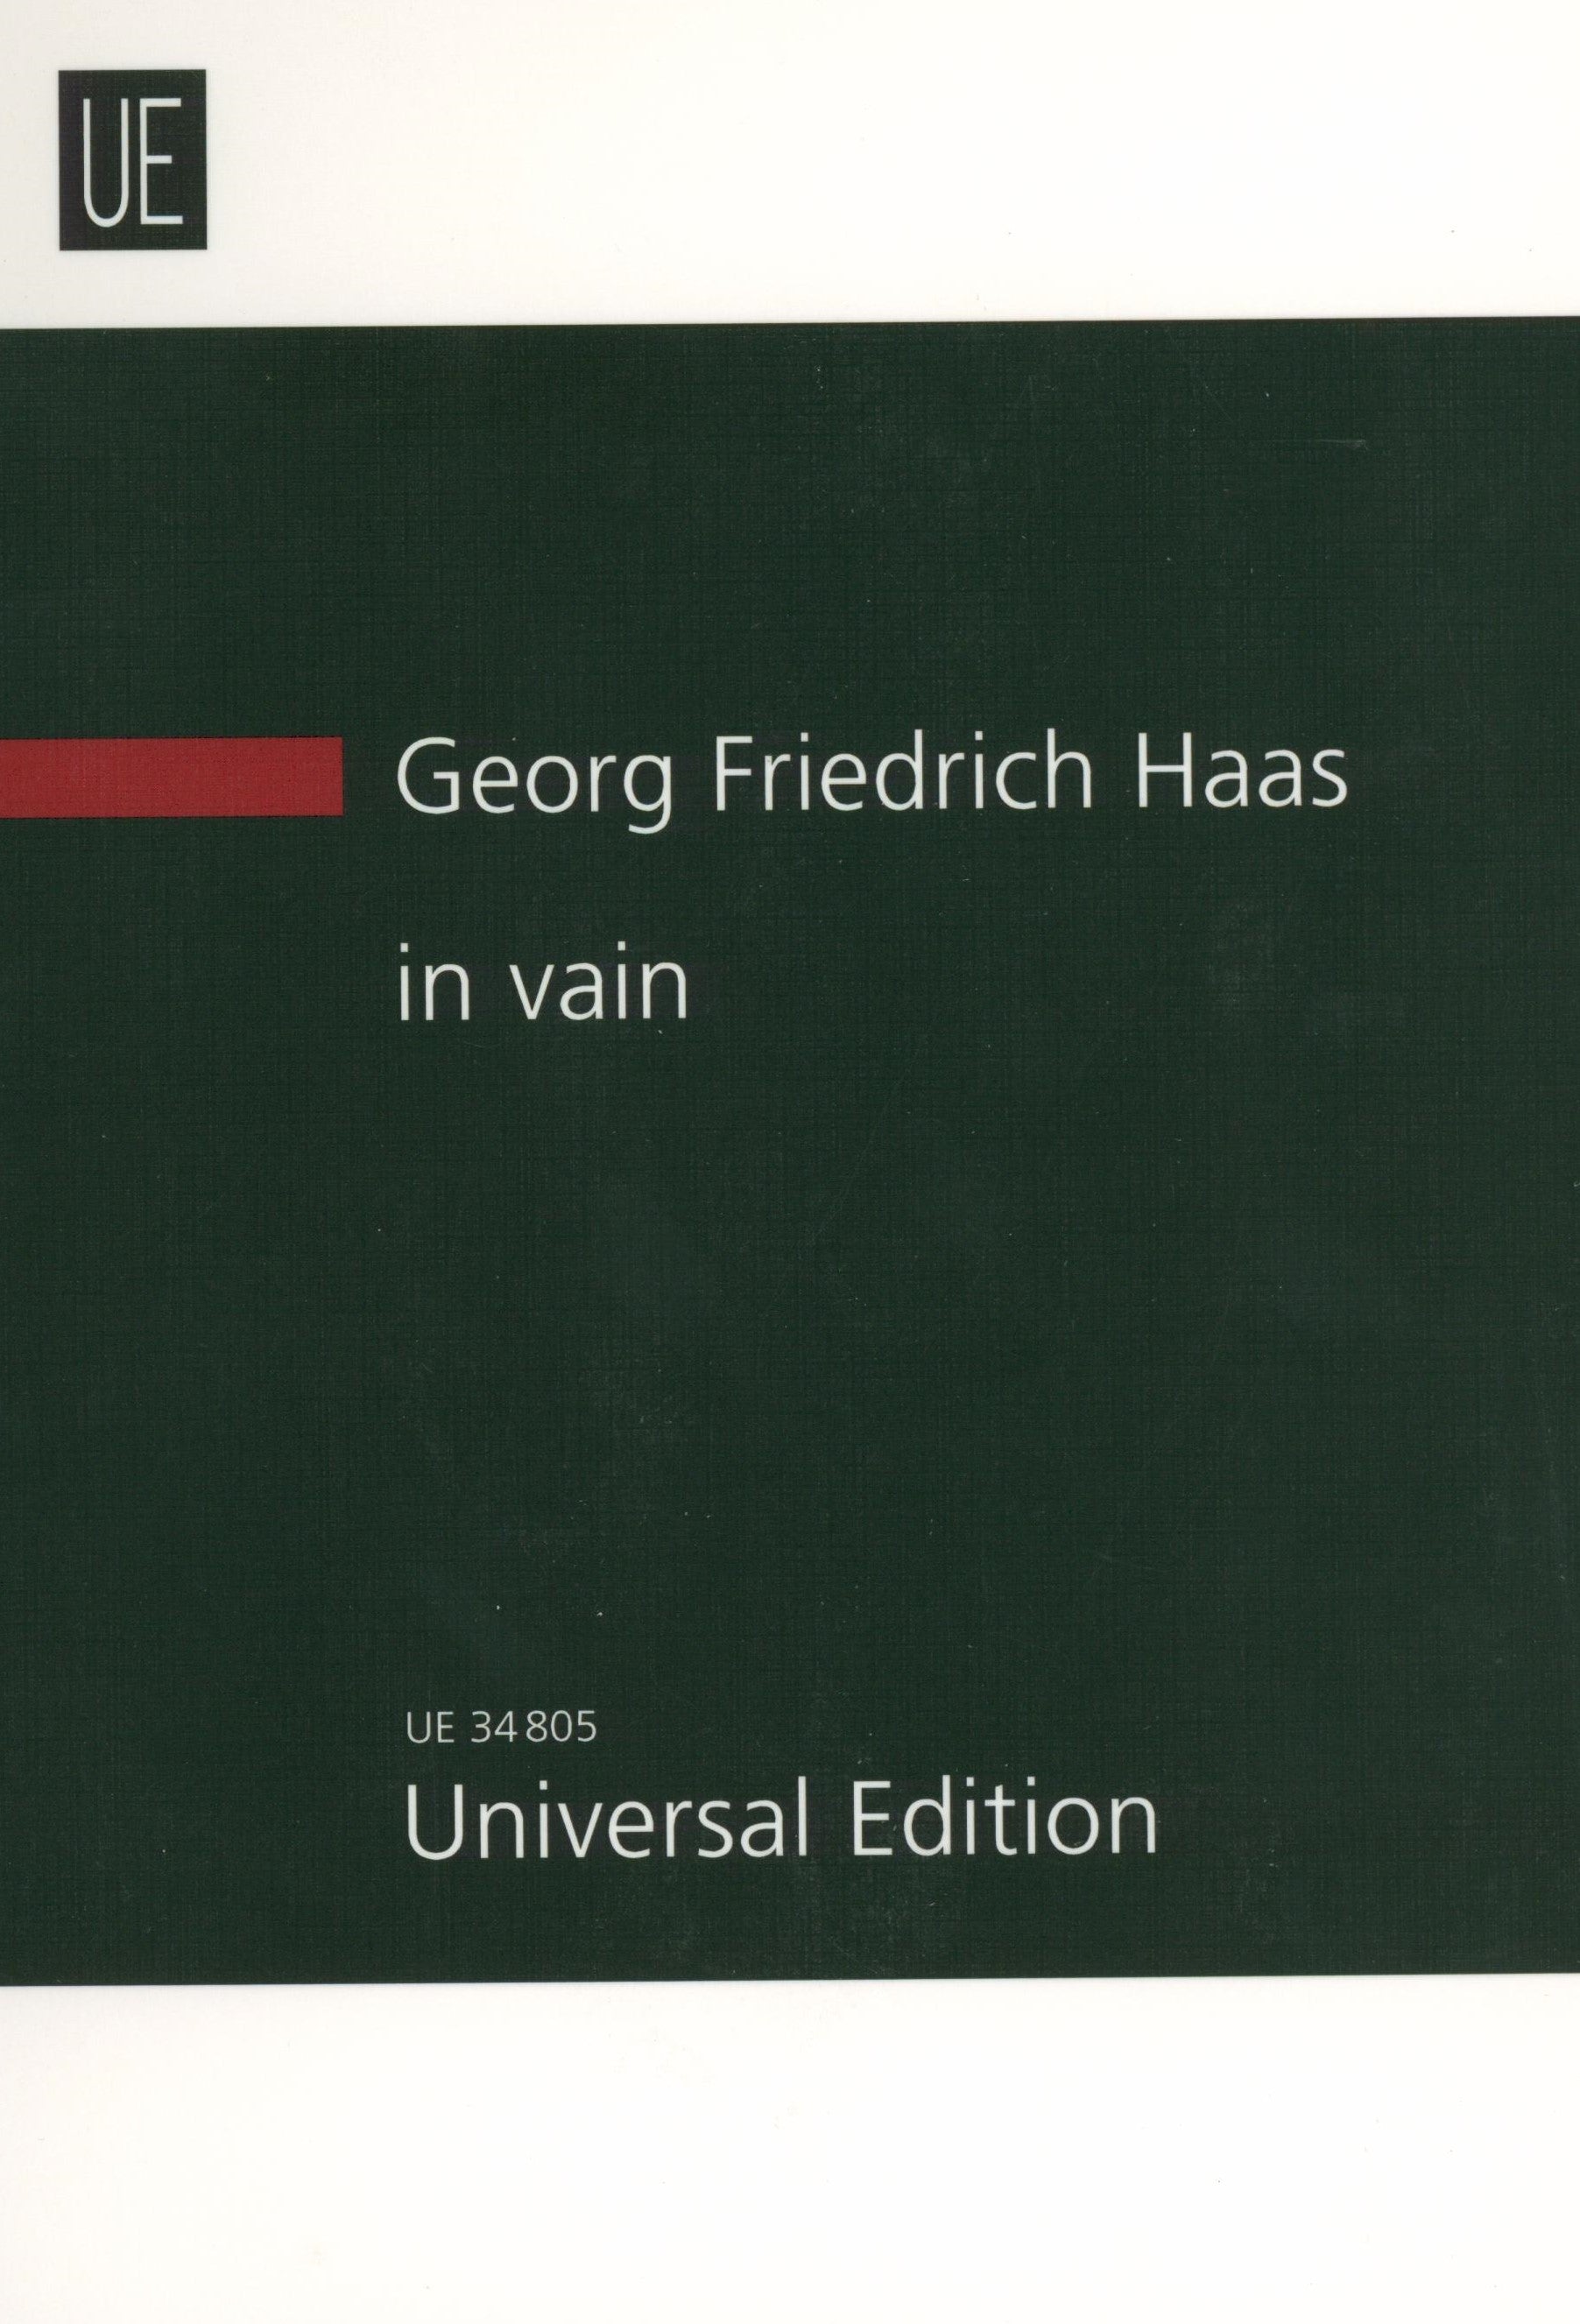 Haas: In vain